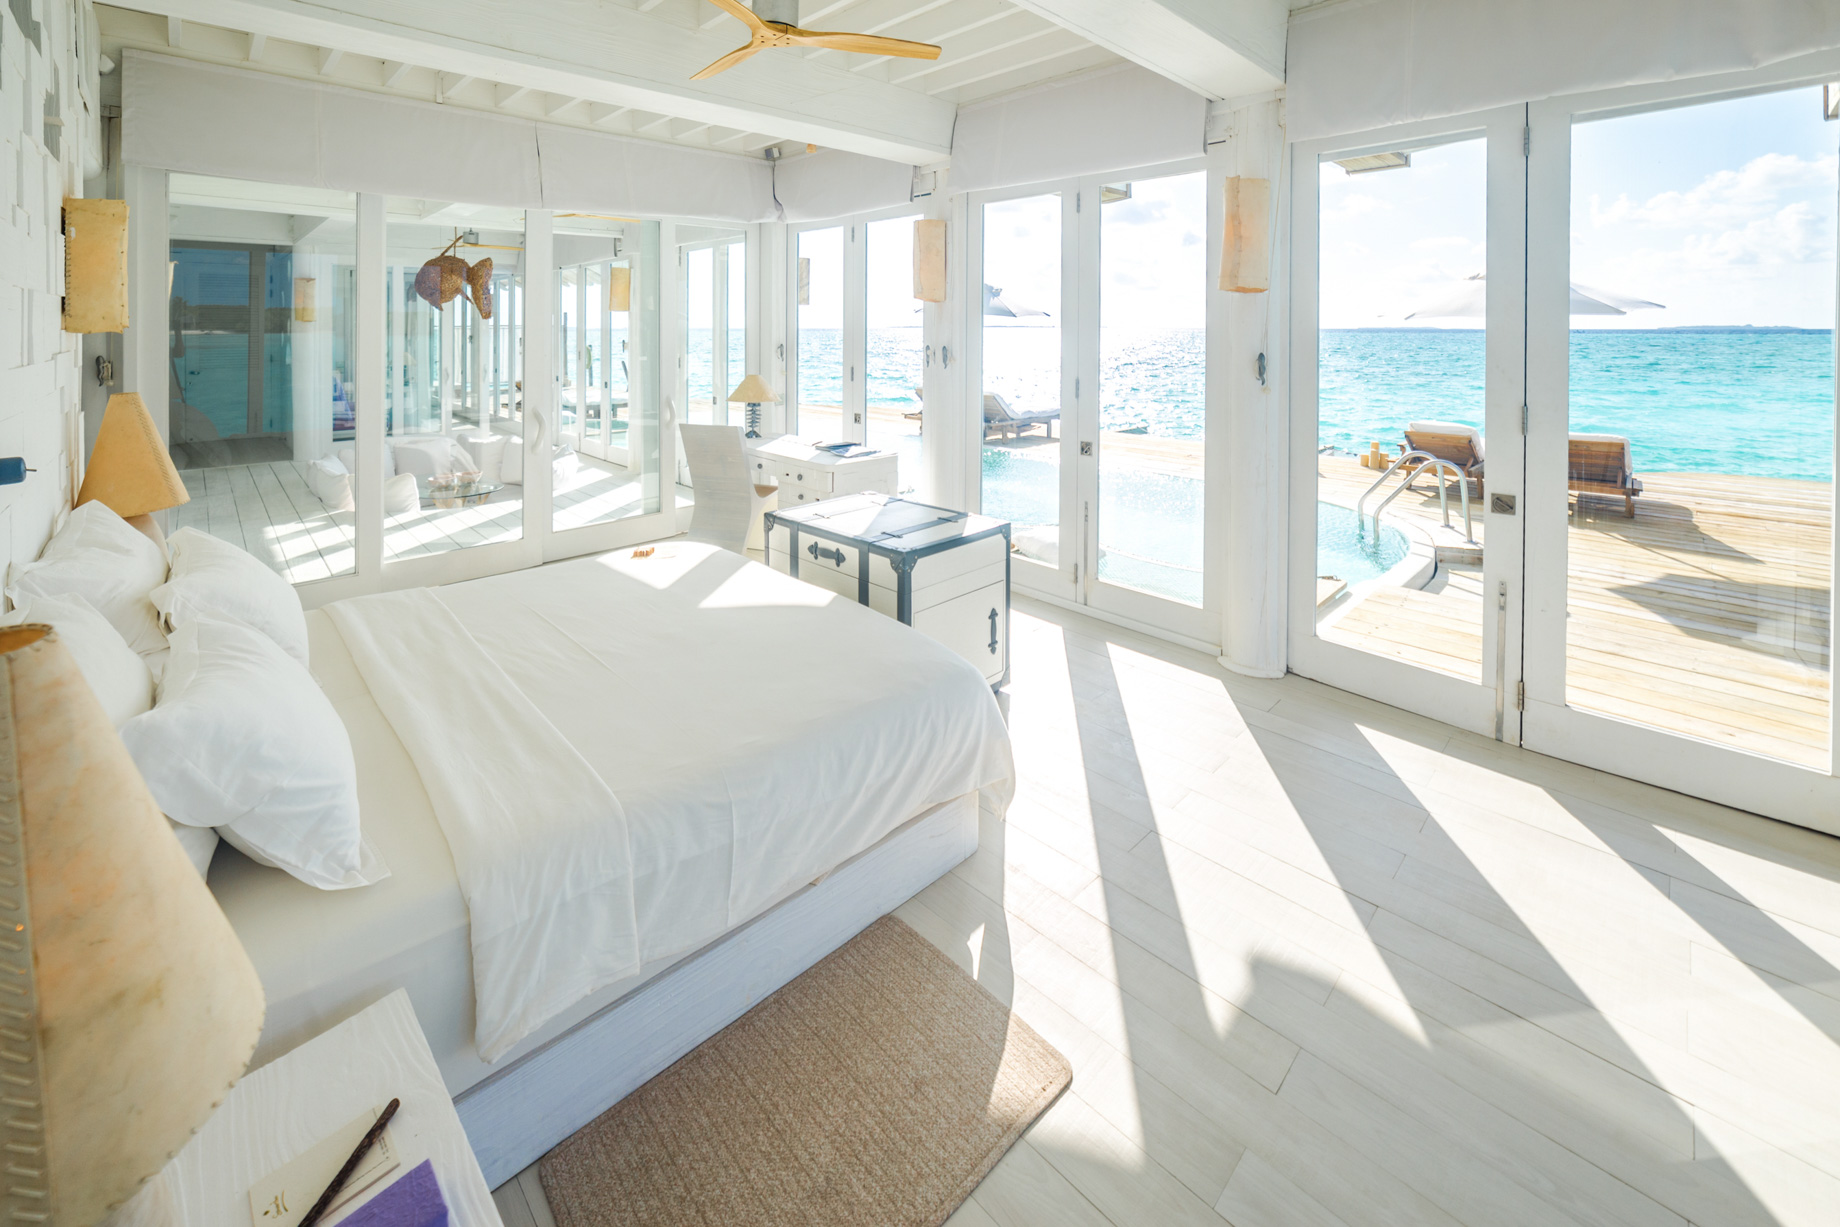 Soneva Jani Resort – Noonu Atoll, Medhufaru, Maldives – 3 Bedroom Water Reserve Villa with Slide Interior View